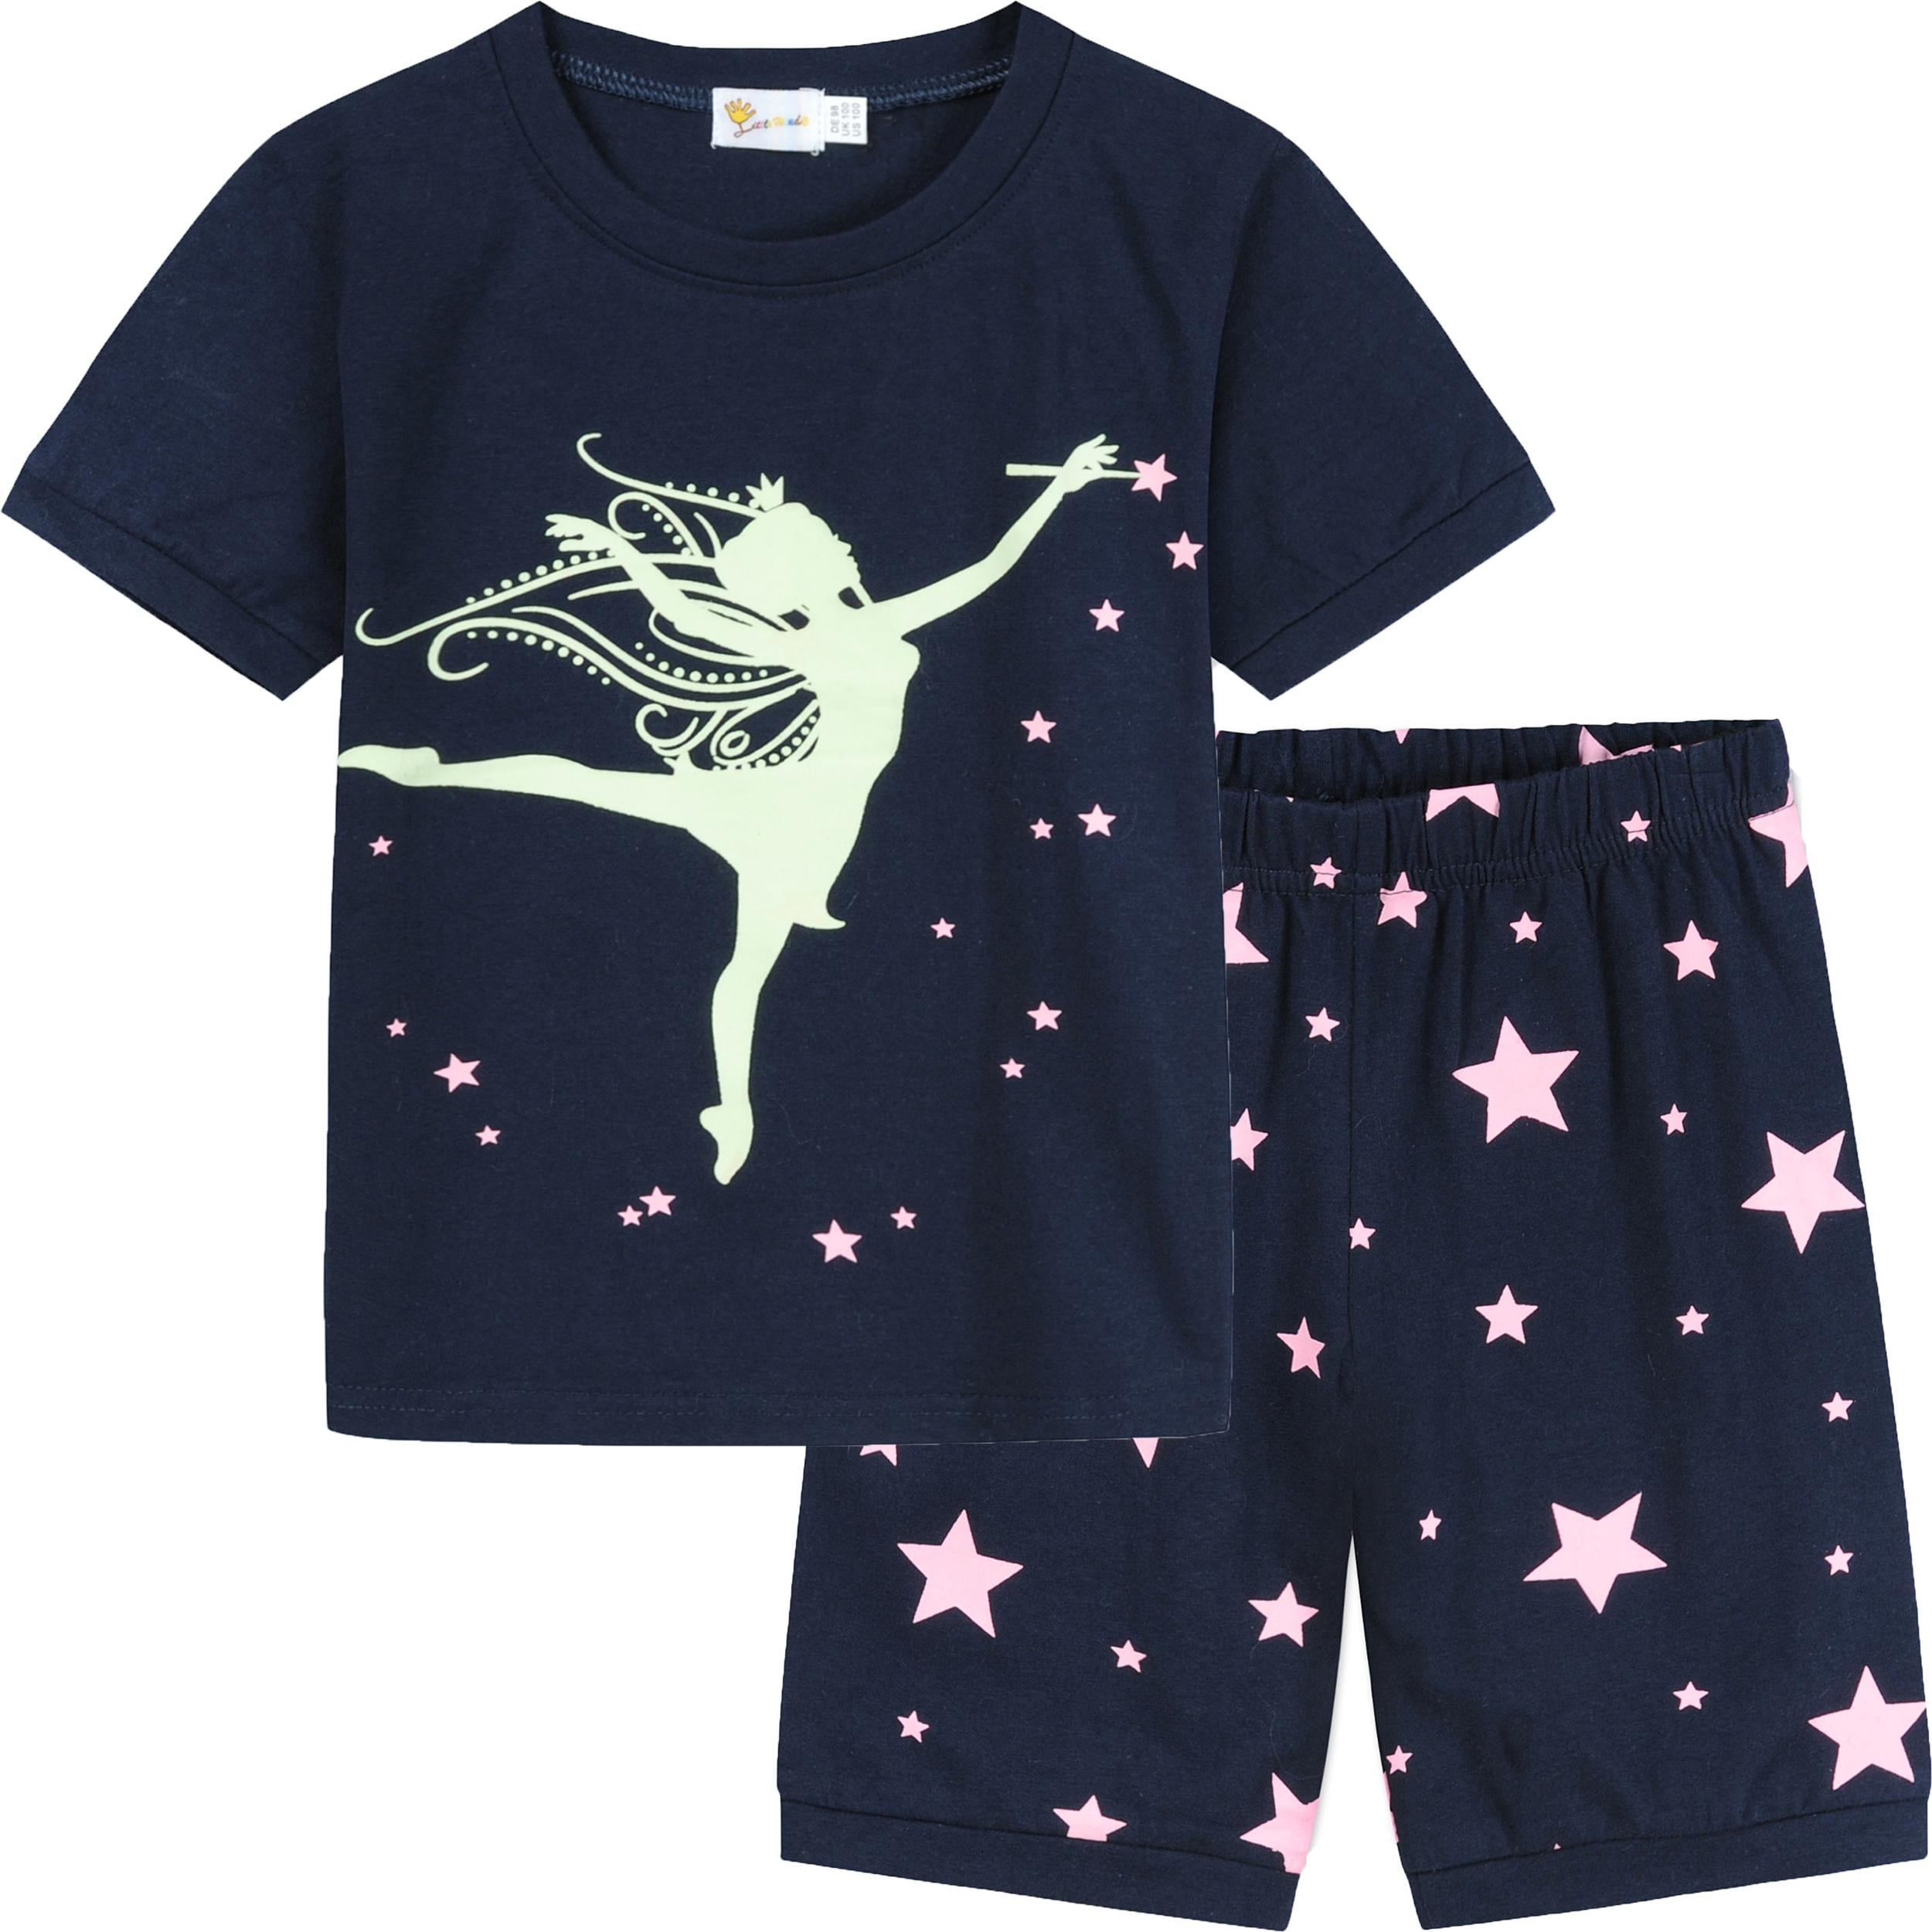 Toddler Girls Pajamas Sets Girls Pjs Short Sleeve Unicorn Graphic Girls Clothes for Summer Wear 100% Cotton